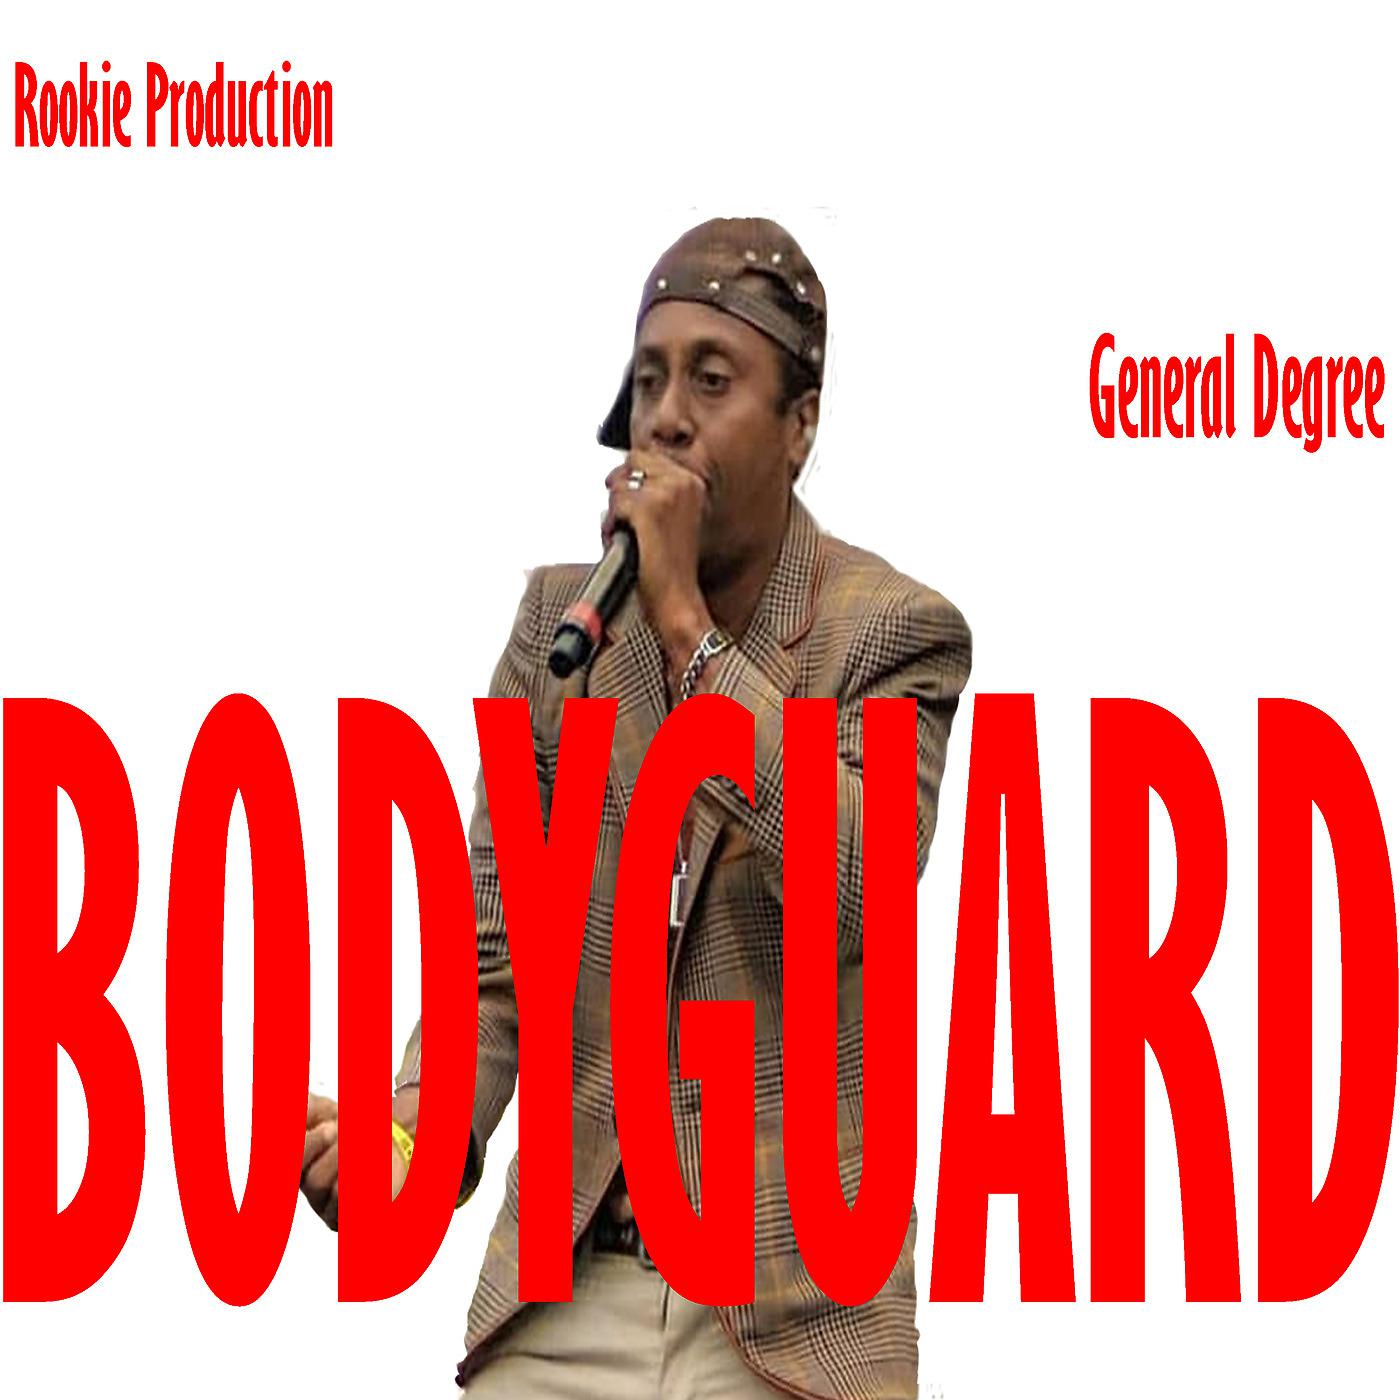 Постер альбома Bodyguard